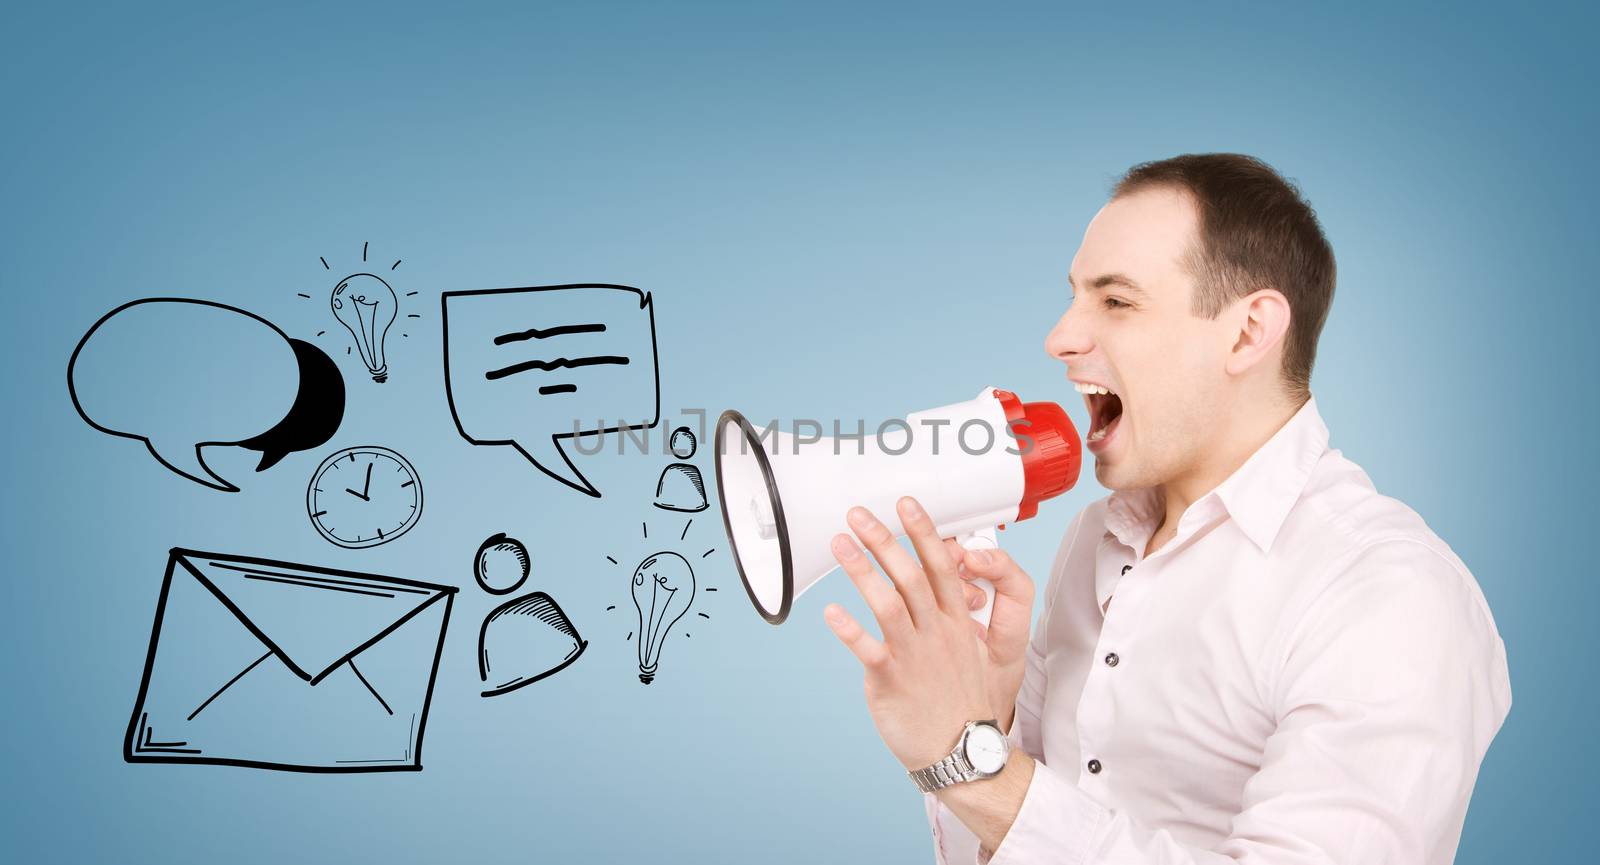 communication concept - businessman with megaphone over blue background